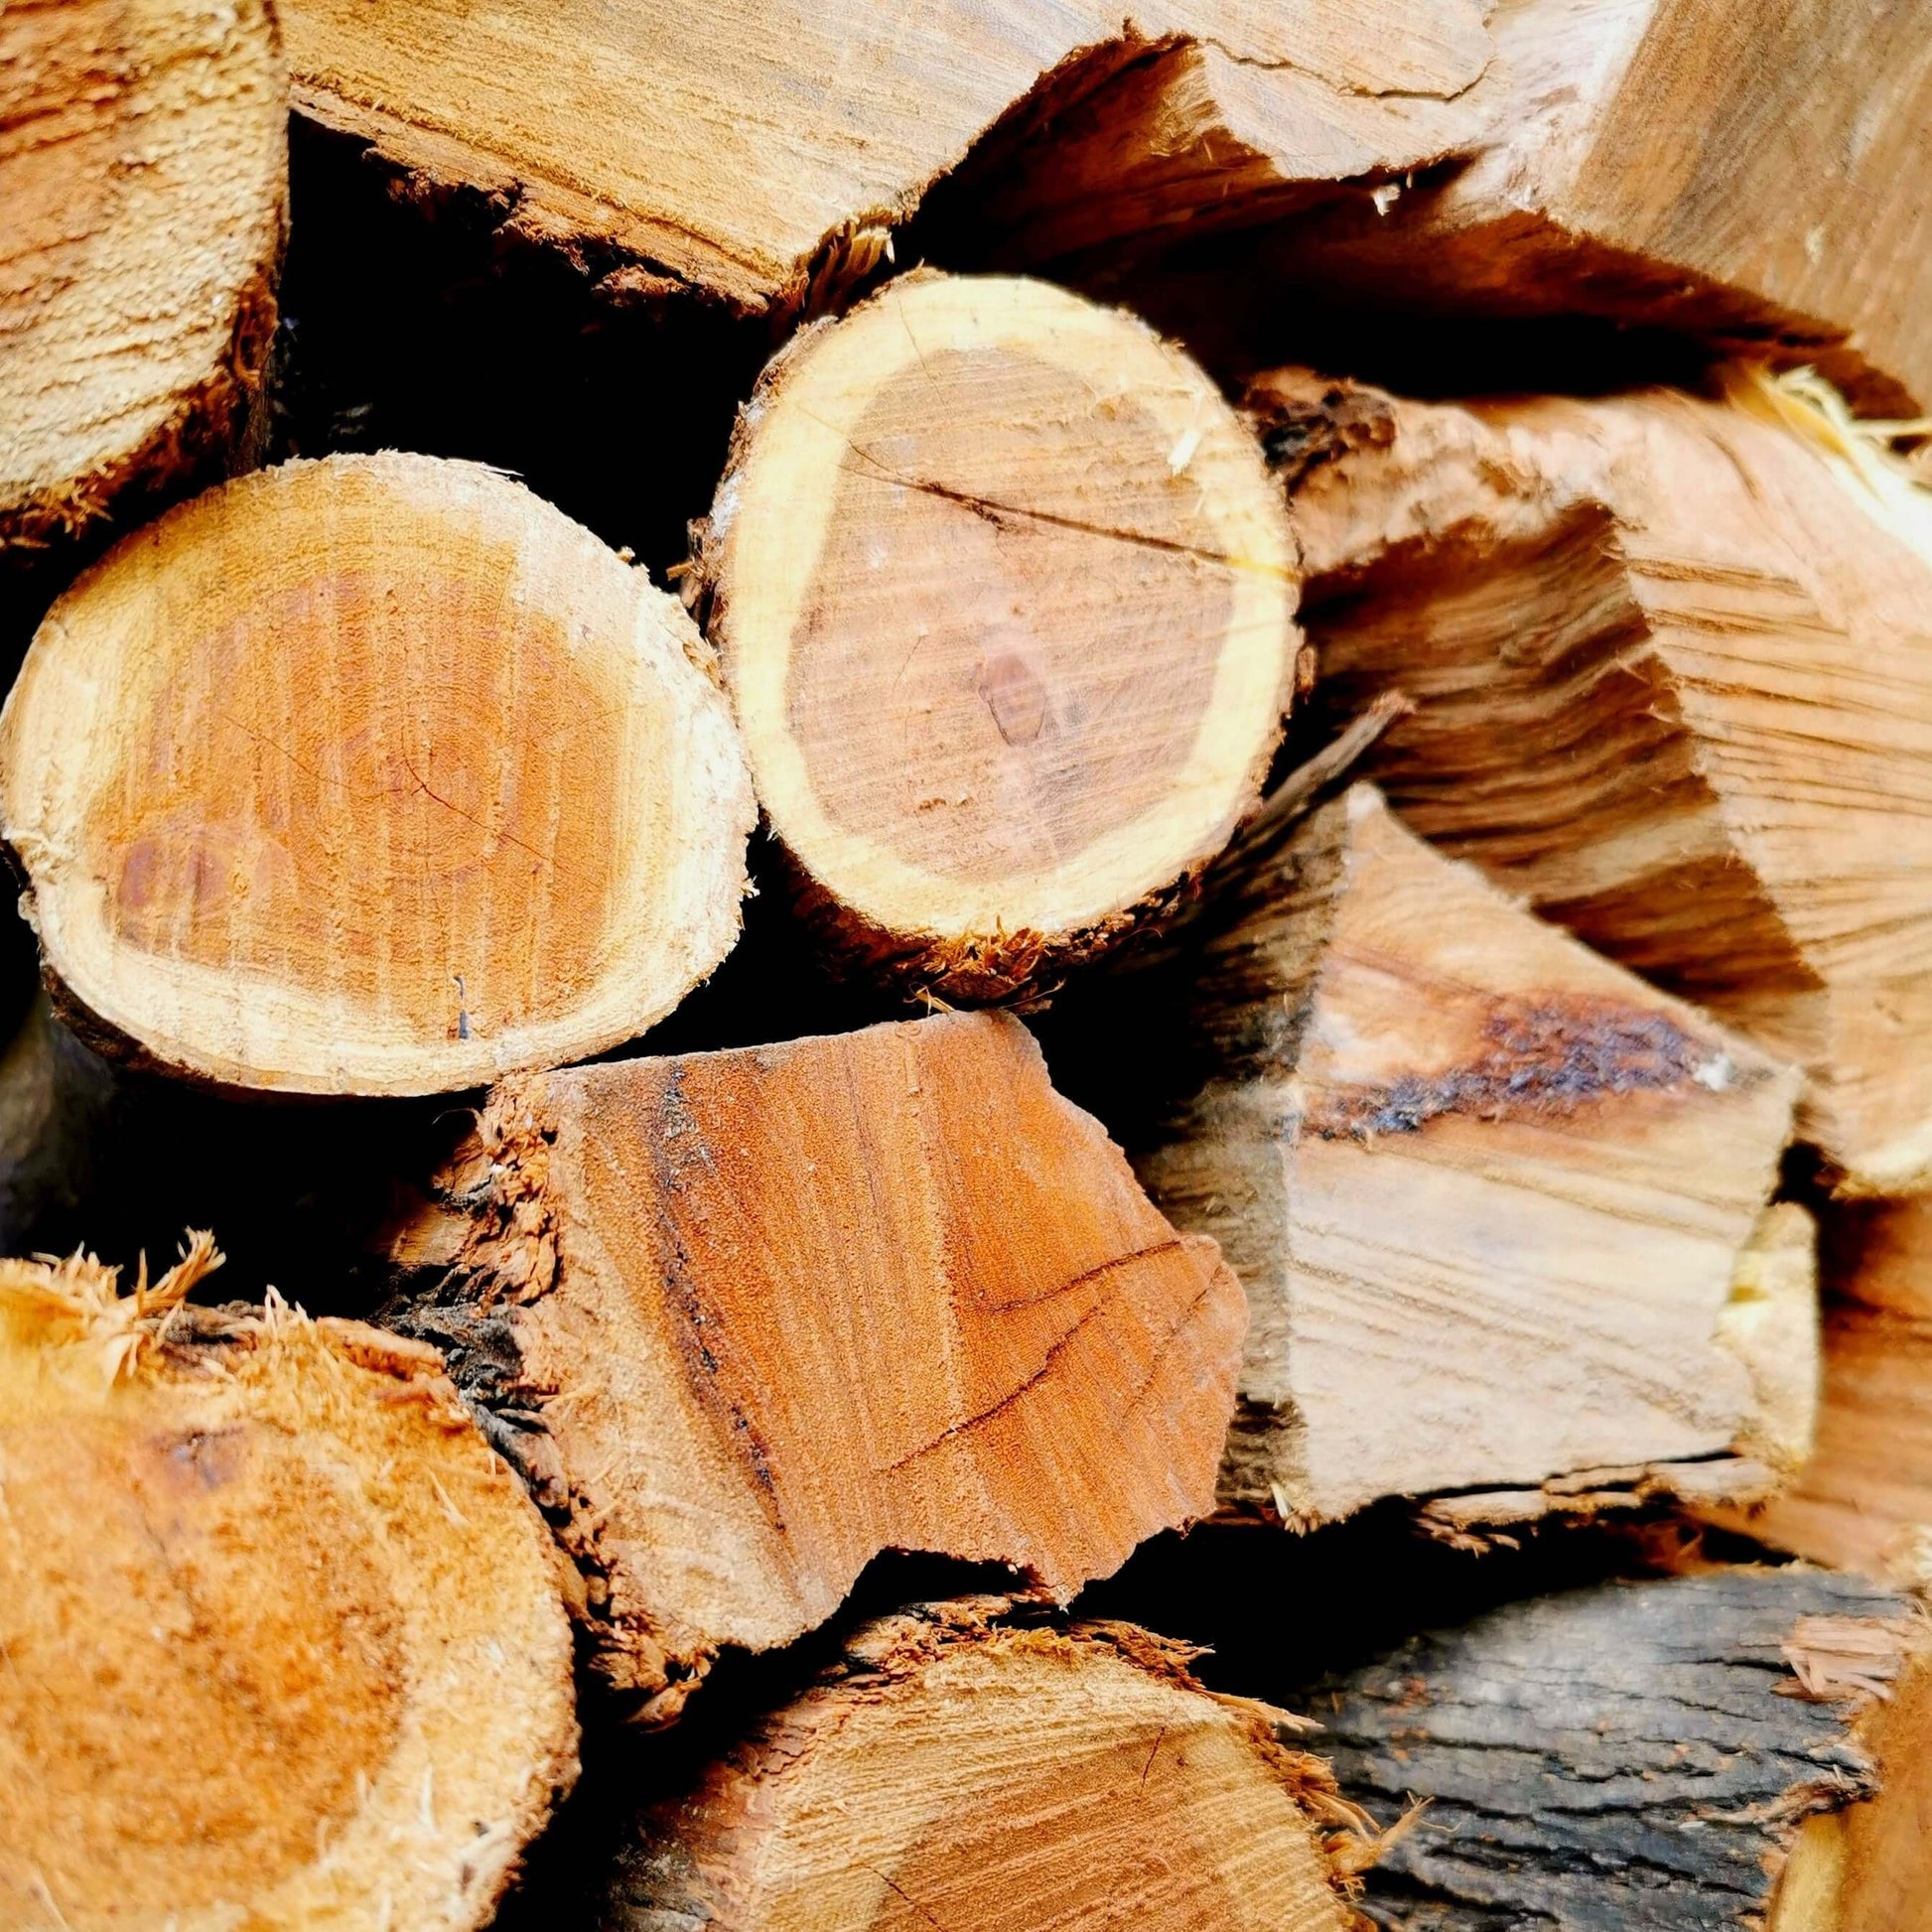 Mesquite Braai wood (Prosopis/Doringhout) - Cape Town Firewood